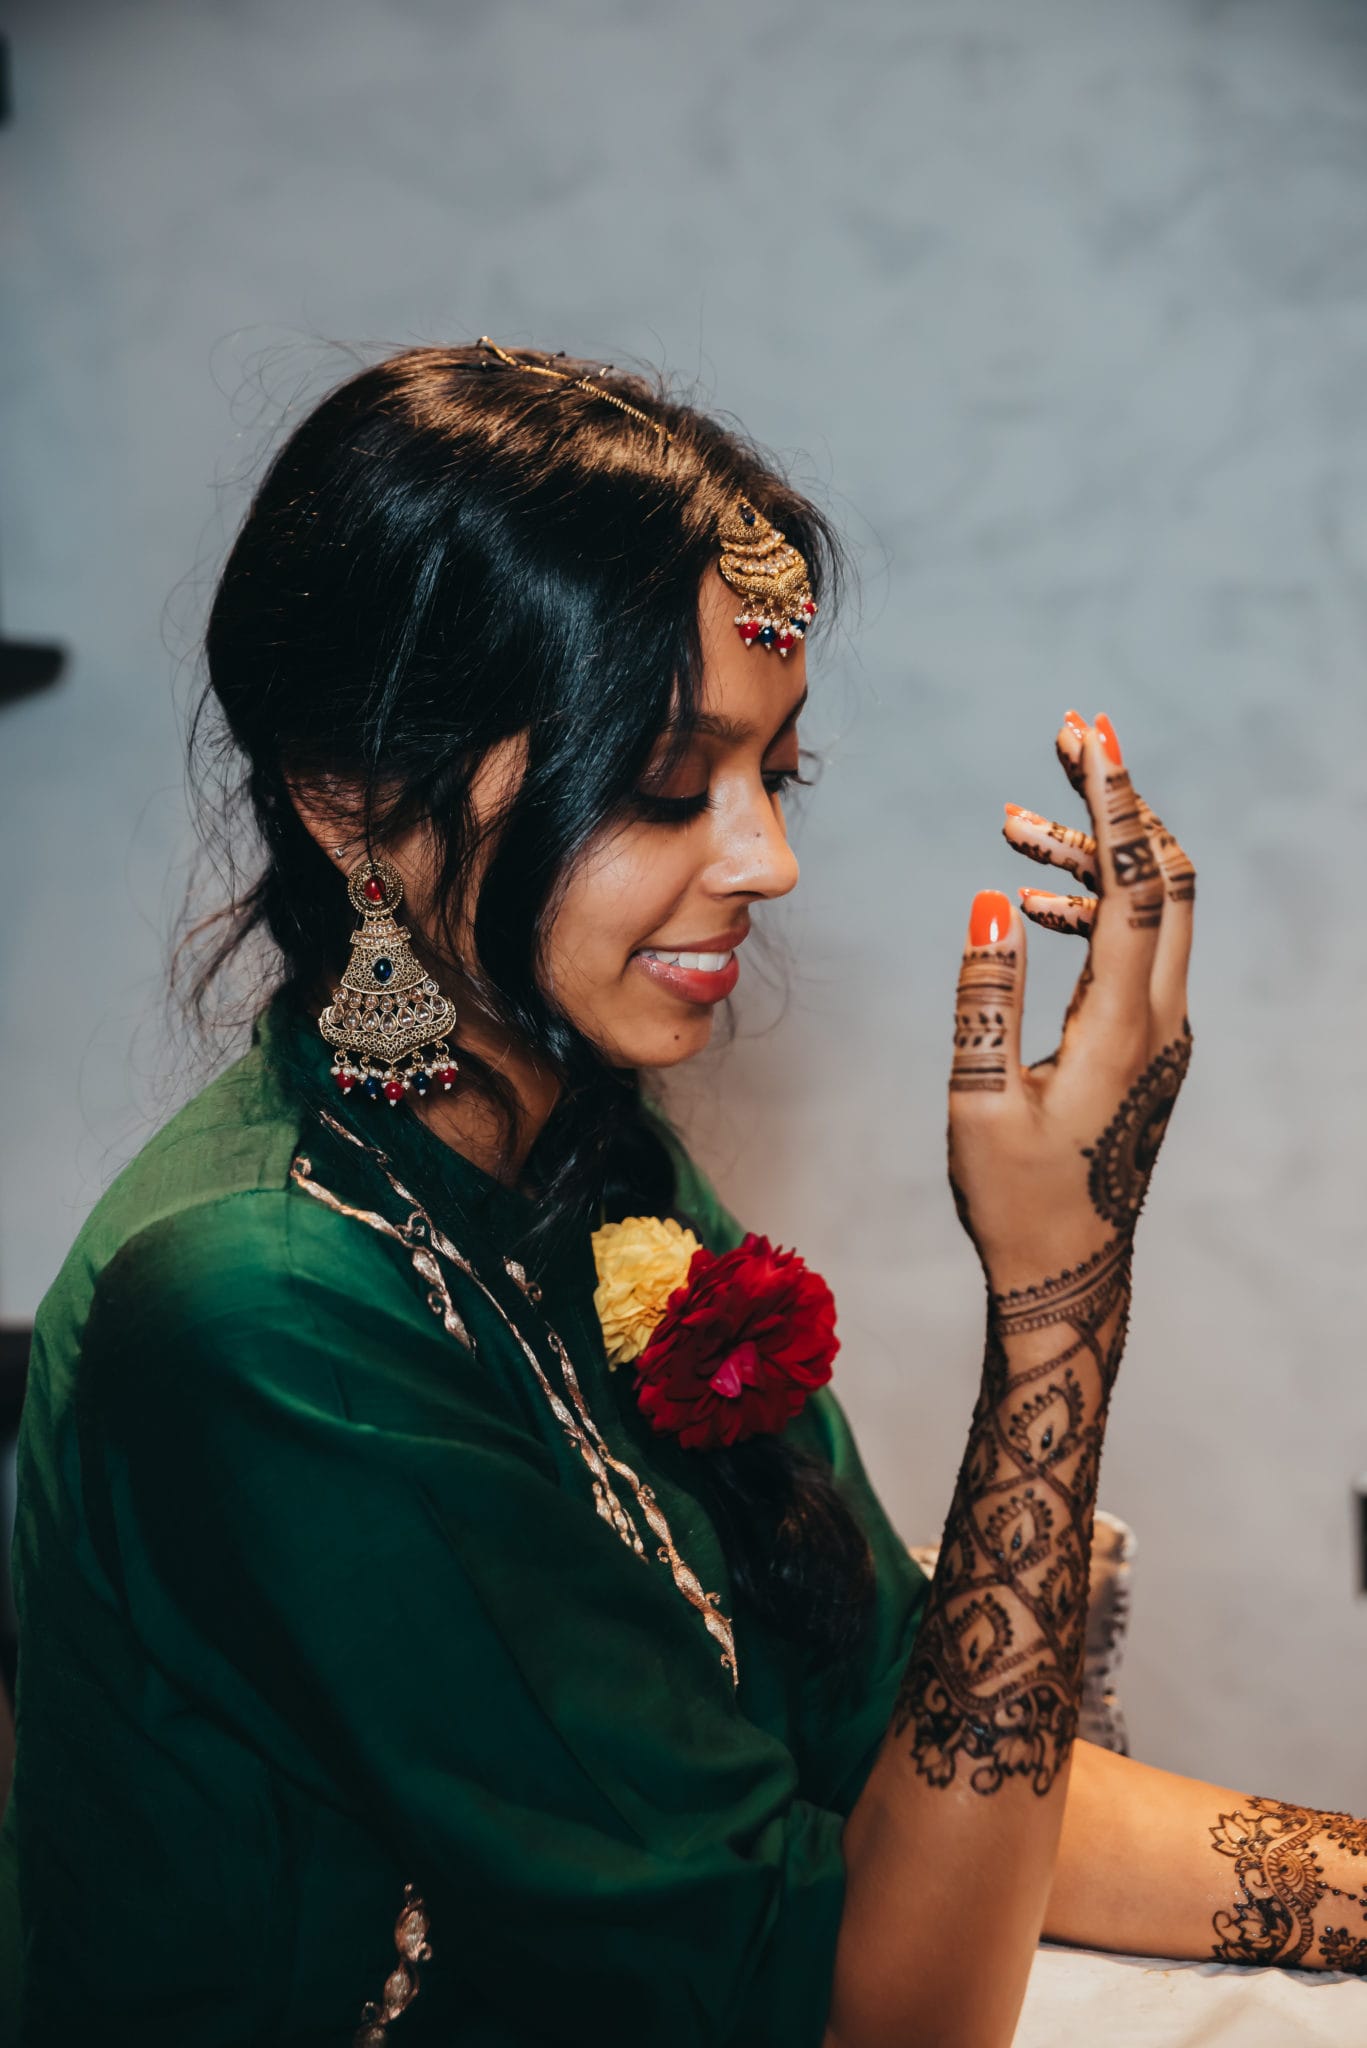 Mehndi ceremony in an Indian wedding ceremony